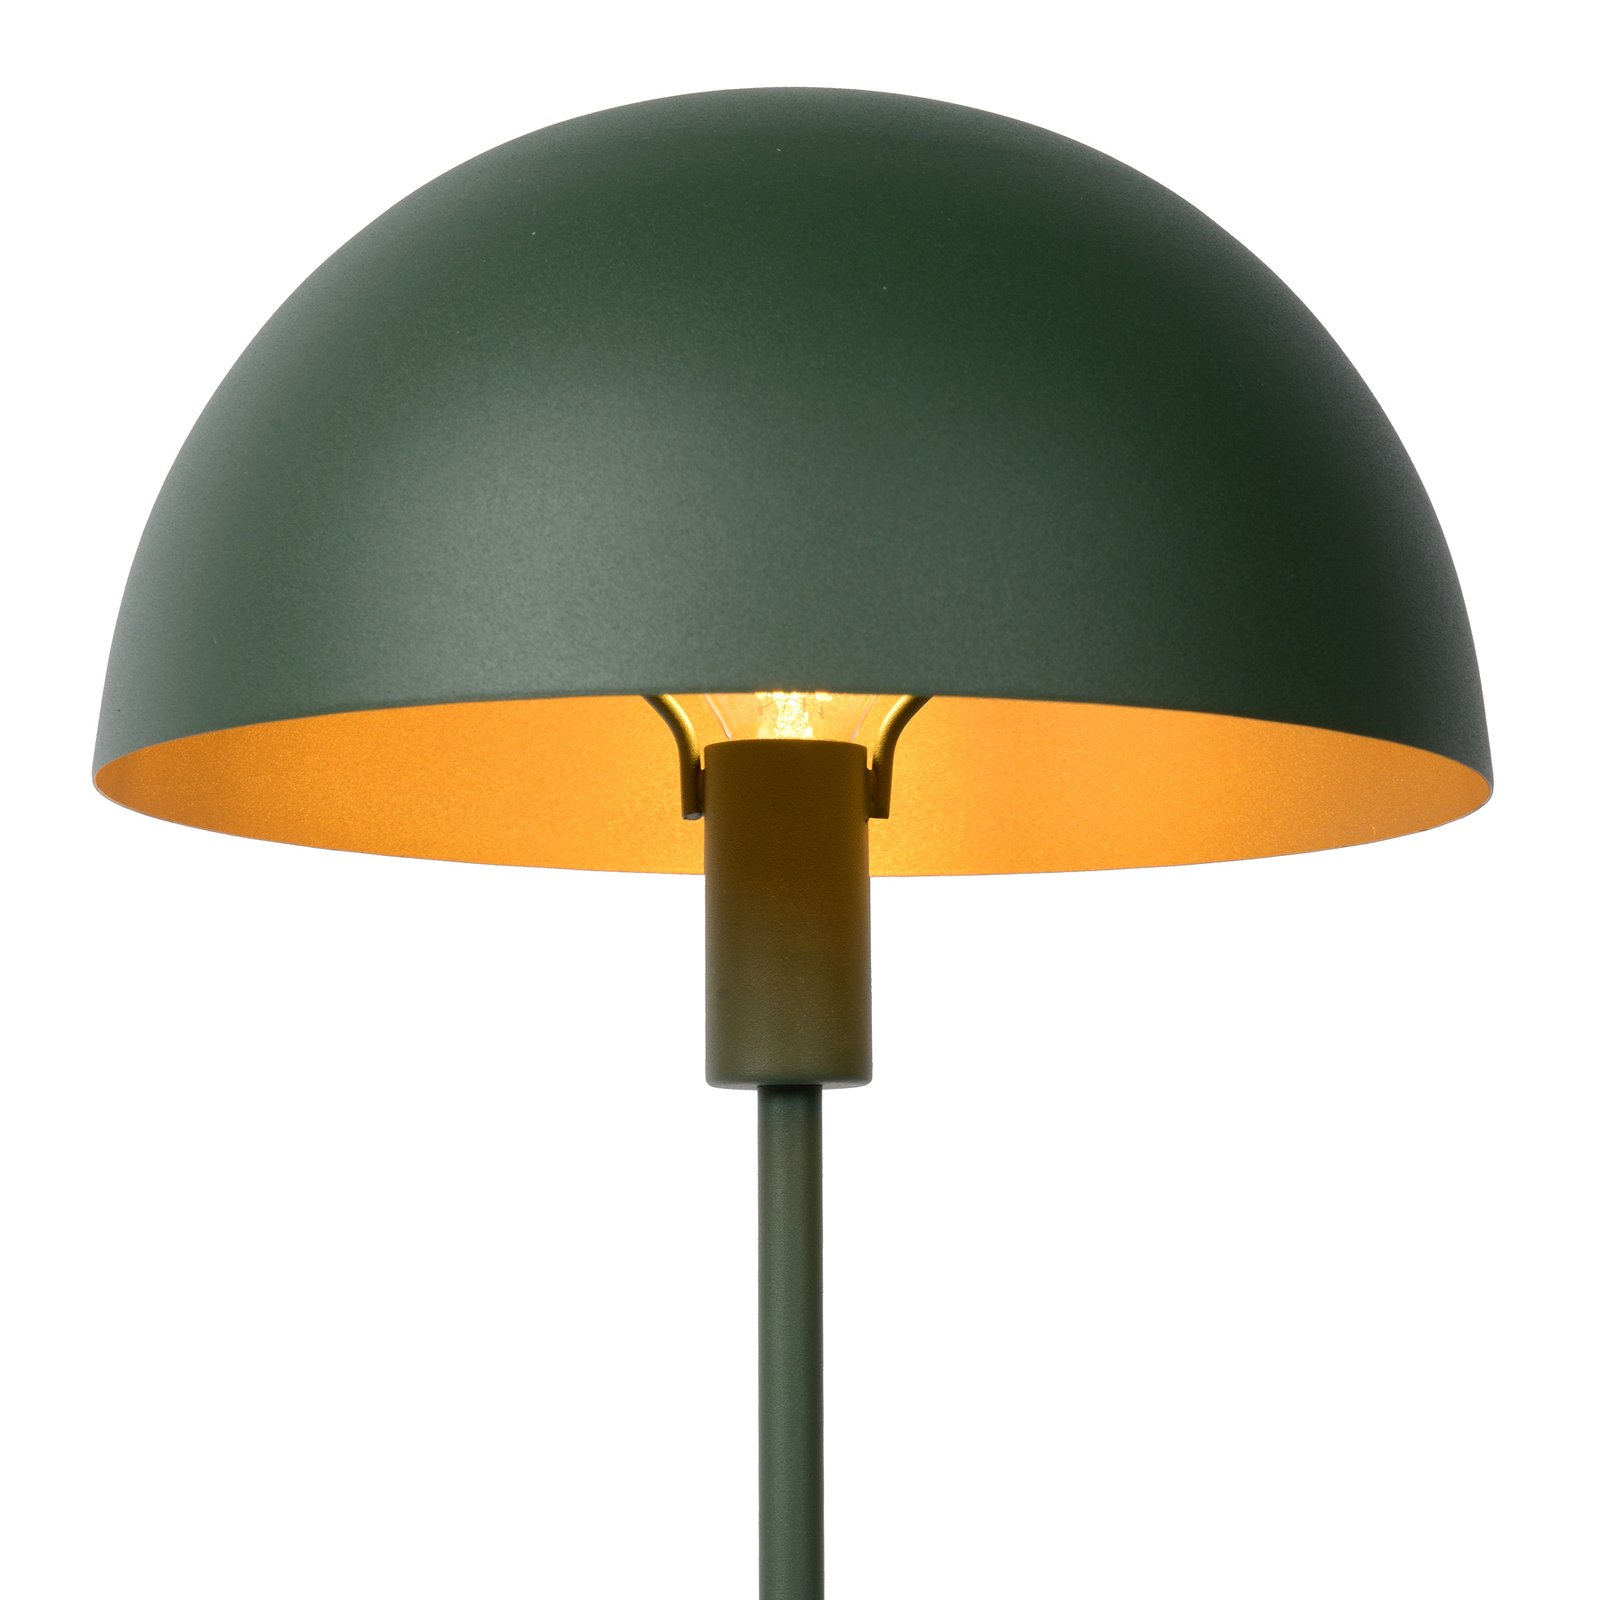 Stalen tafellamp Siemon, Ø 25 cm, groen